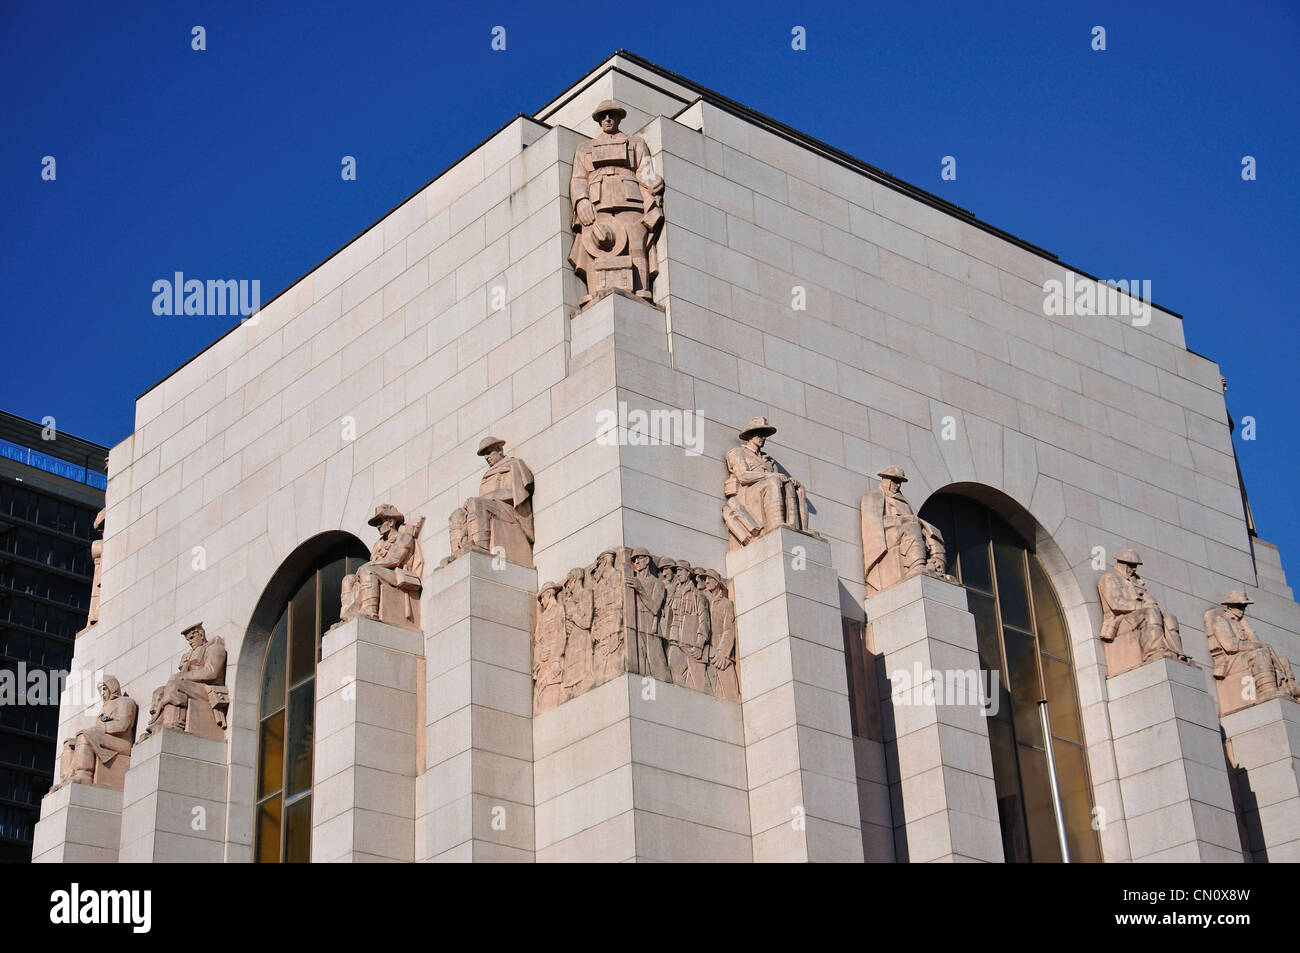 ANZAC War Memorial, Hyde Park, Central Business District, Sydney, New South Wales, Australia Banque D'Images